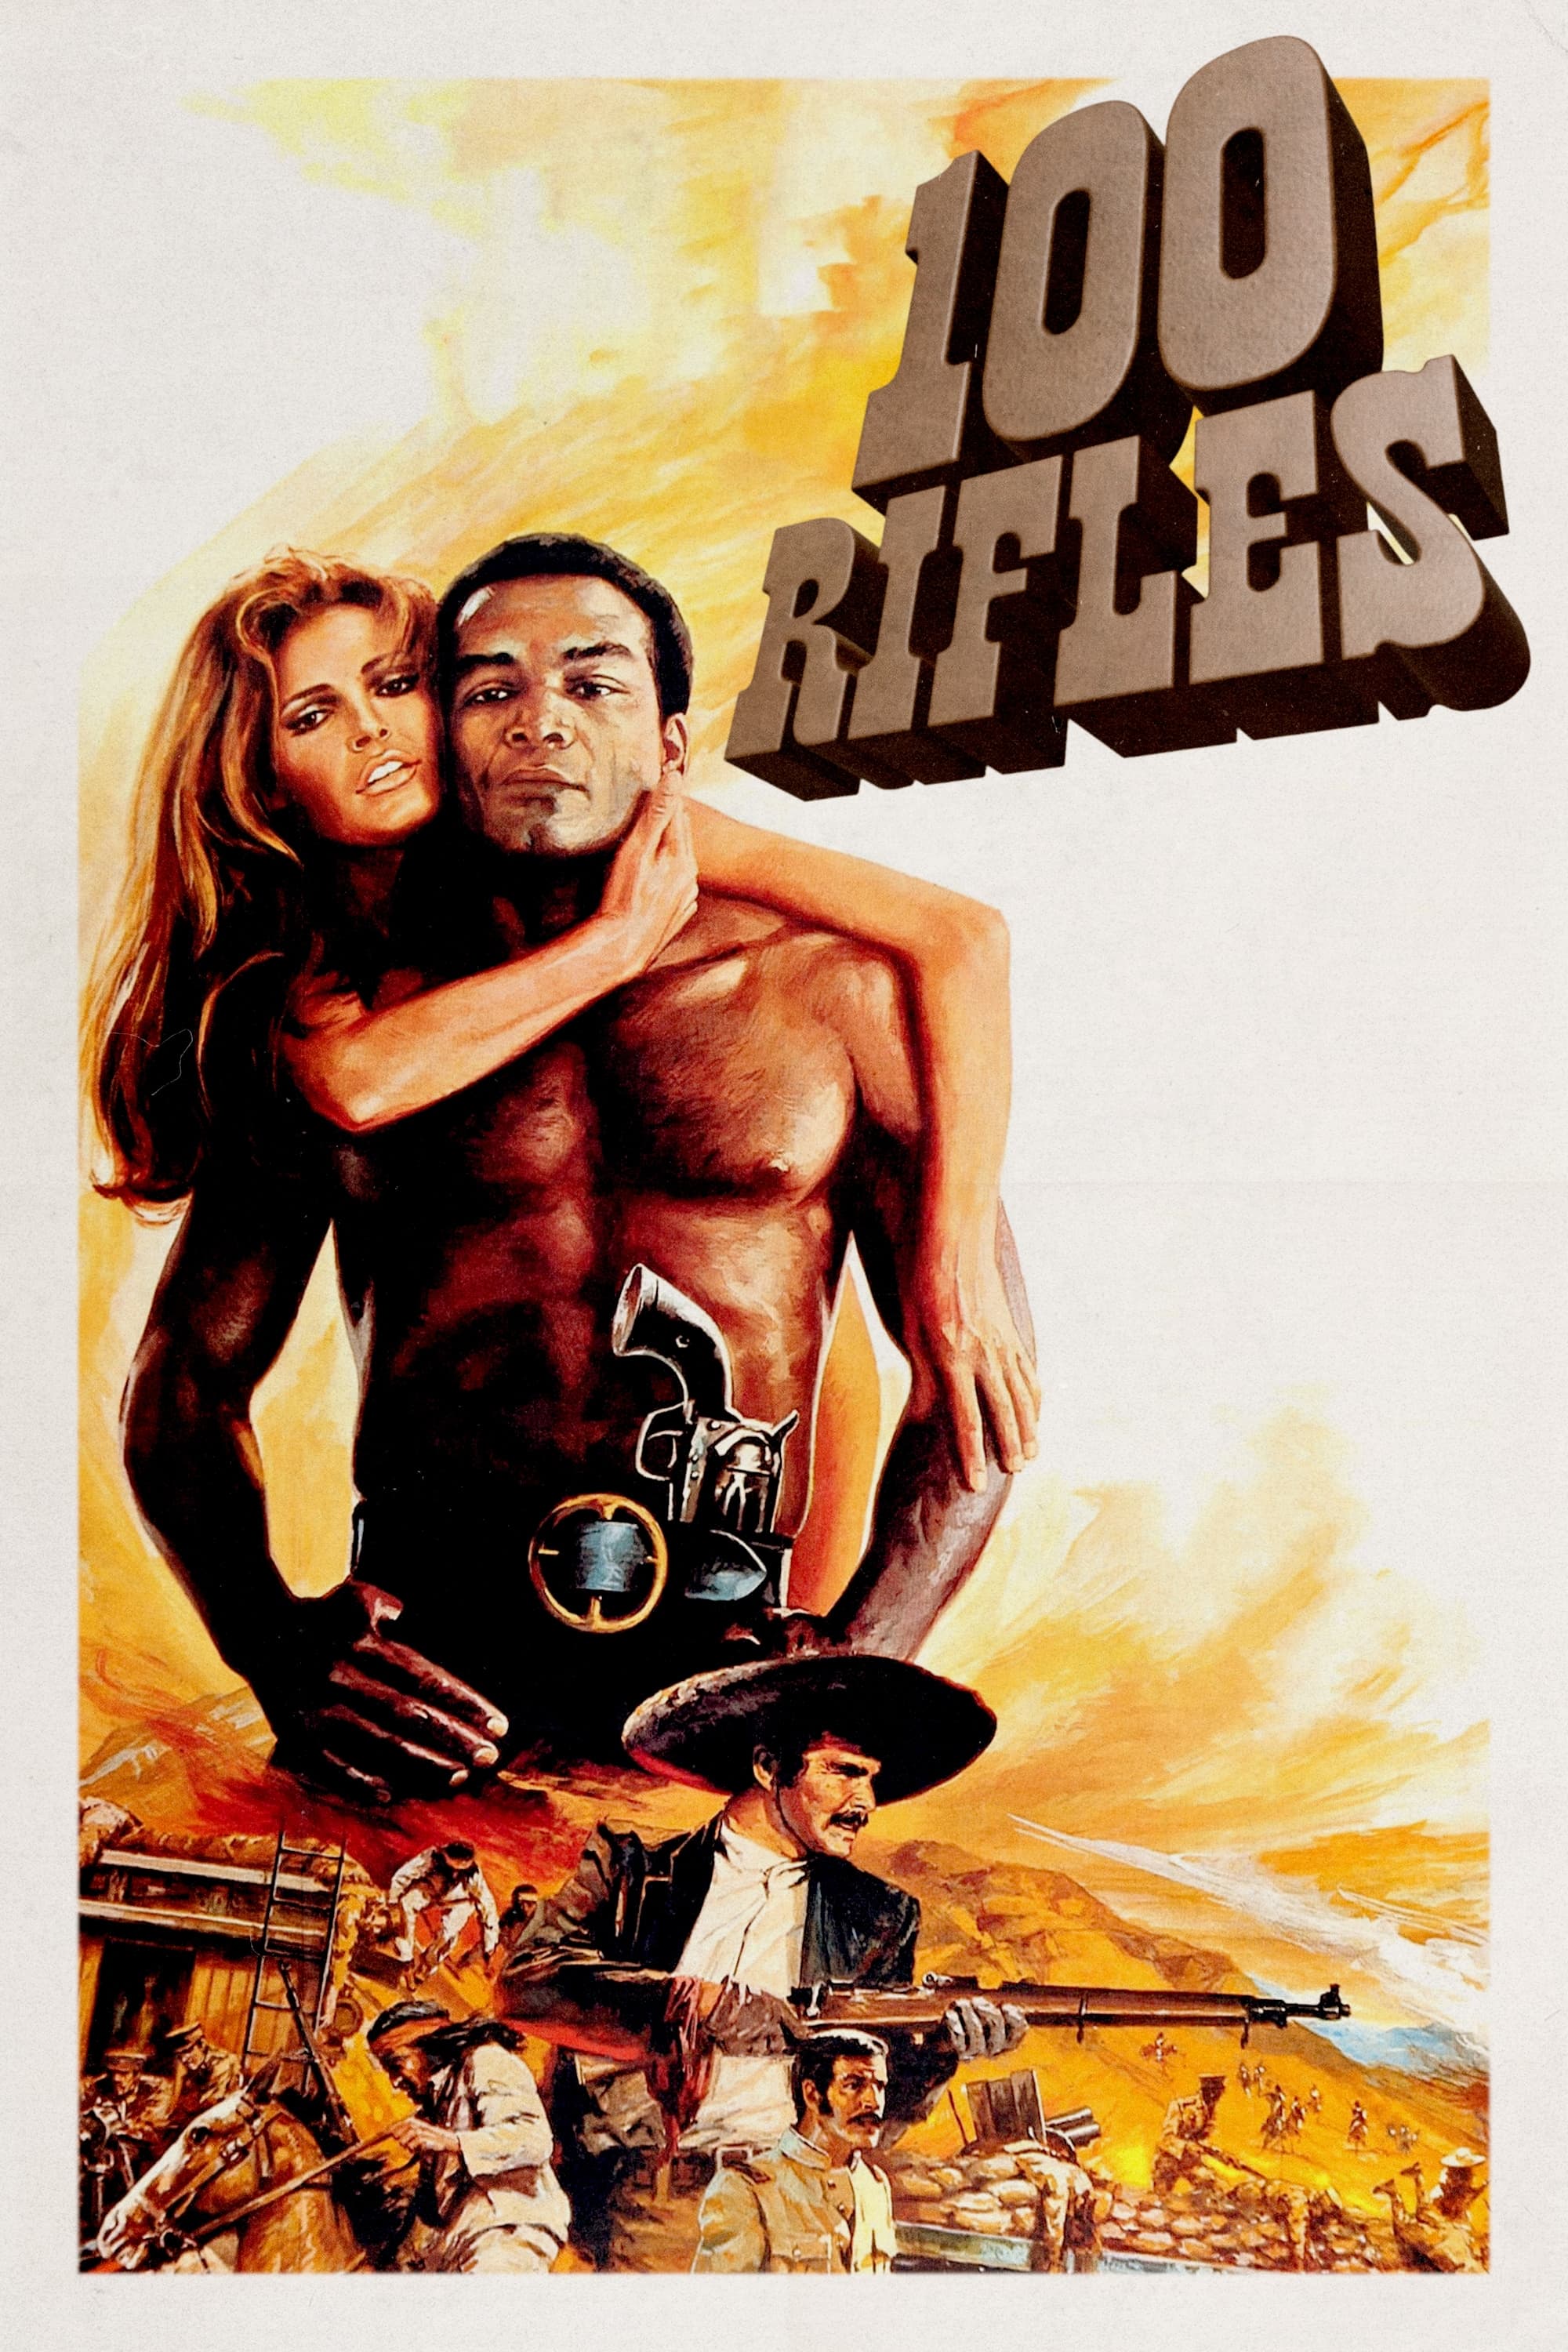 100 Rifles (1969)